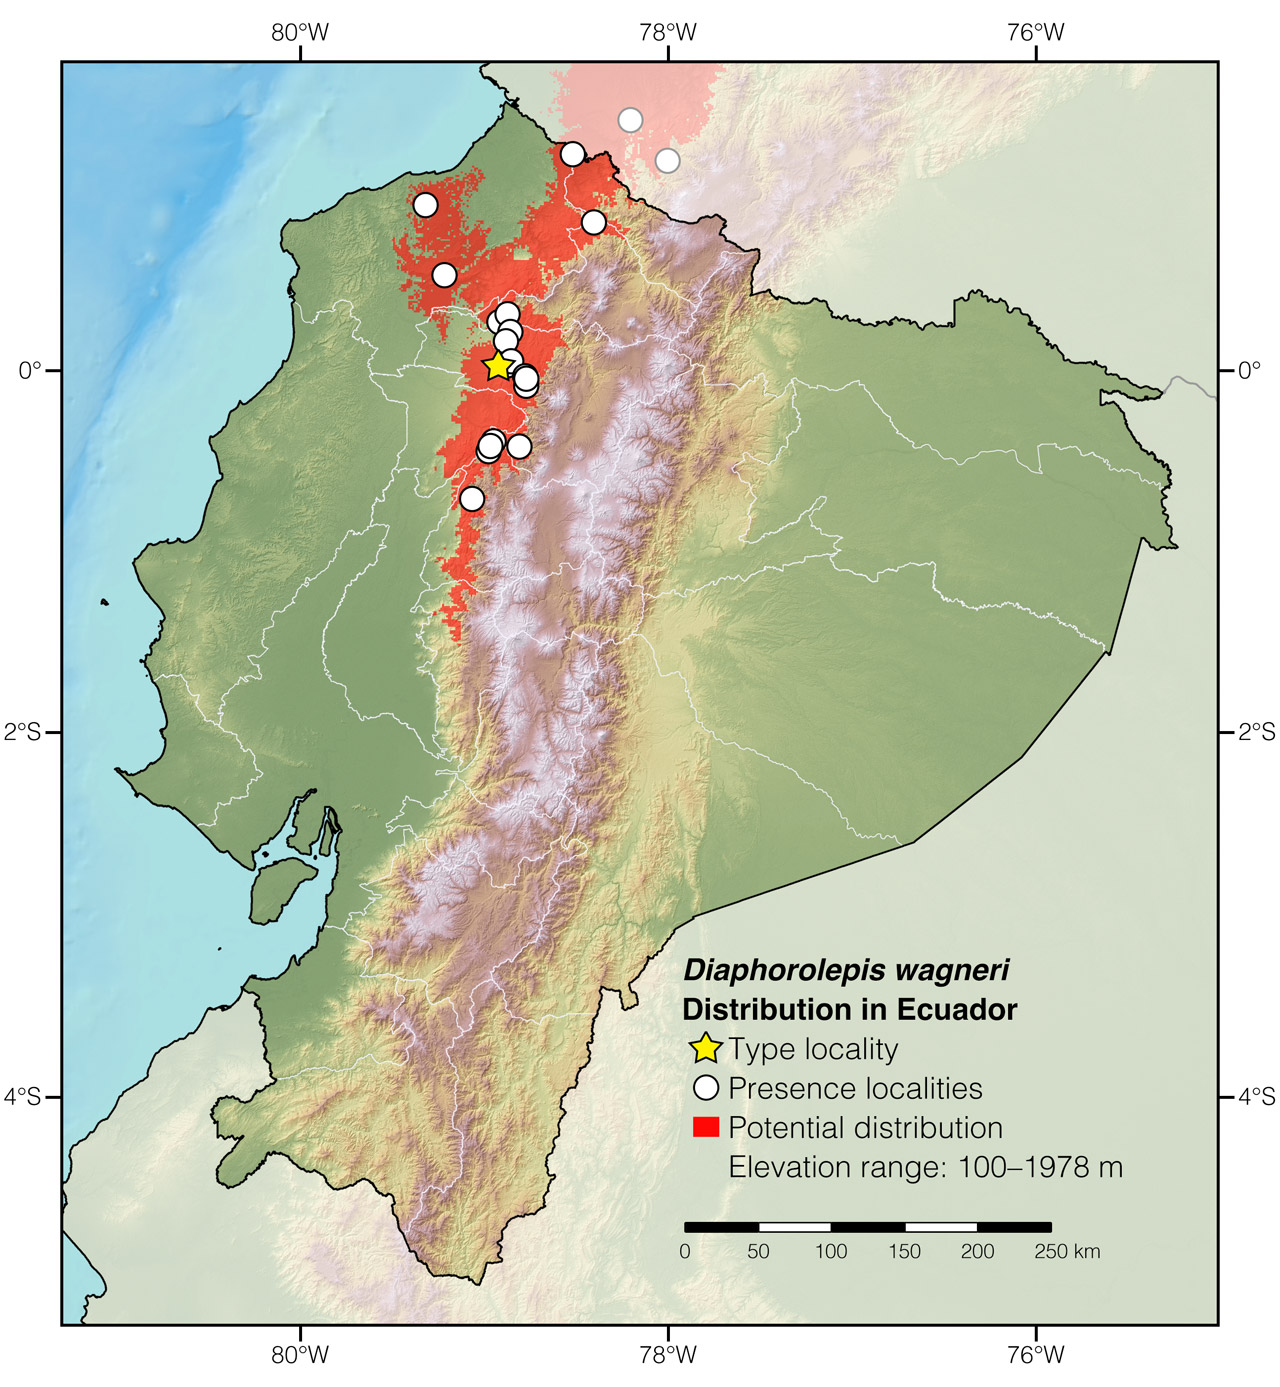 Distribution of Diaphorolepis wagneri in Ecuador